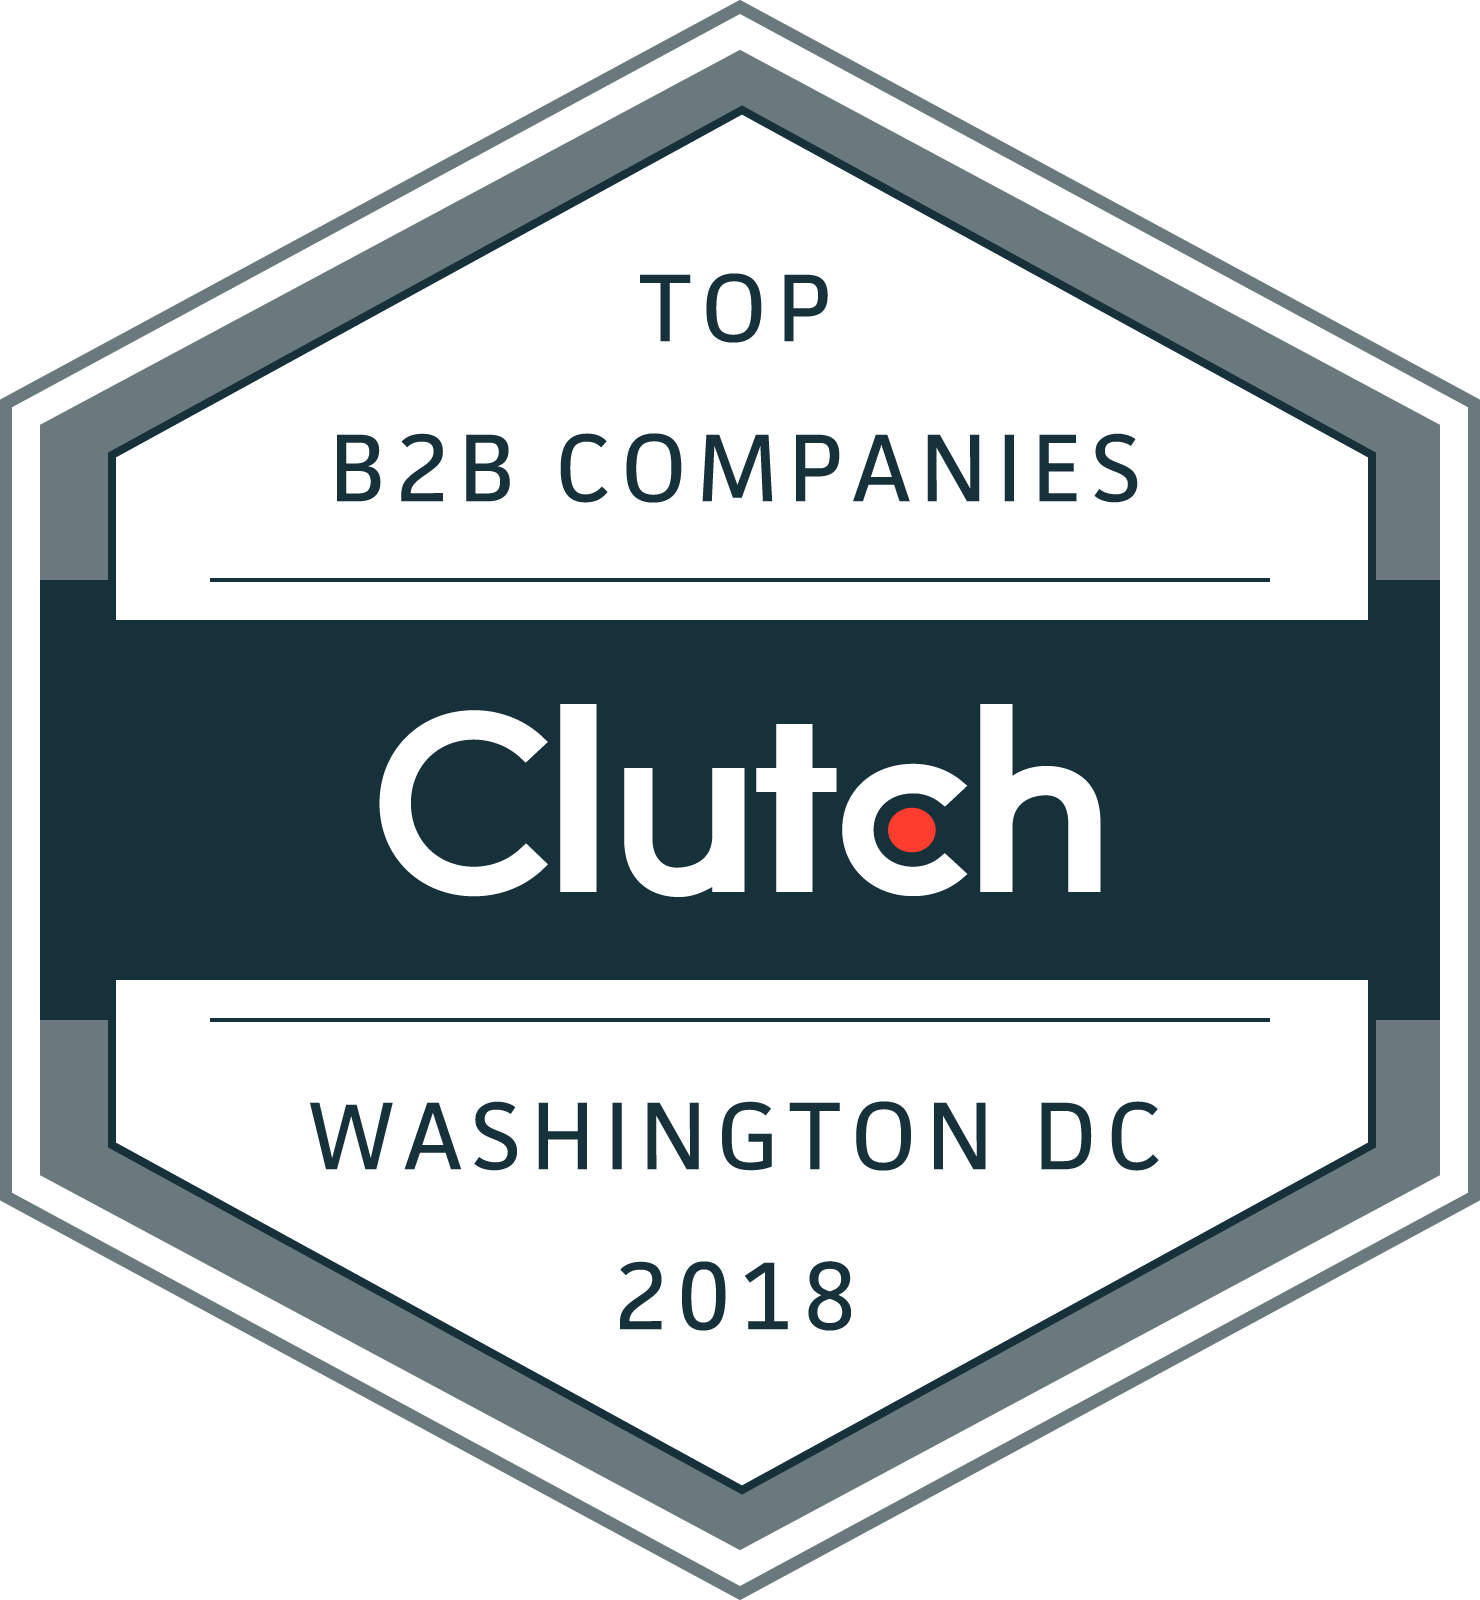 Clutch Top B2B Companies Washington D.C. 2018